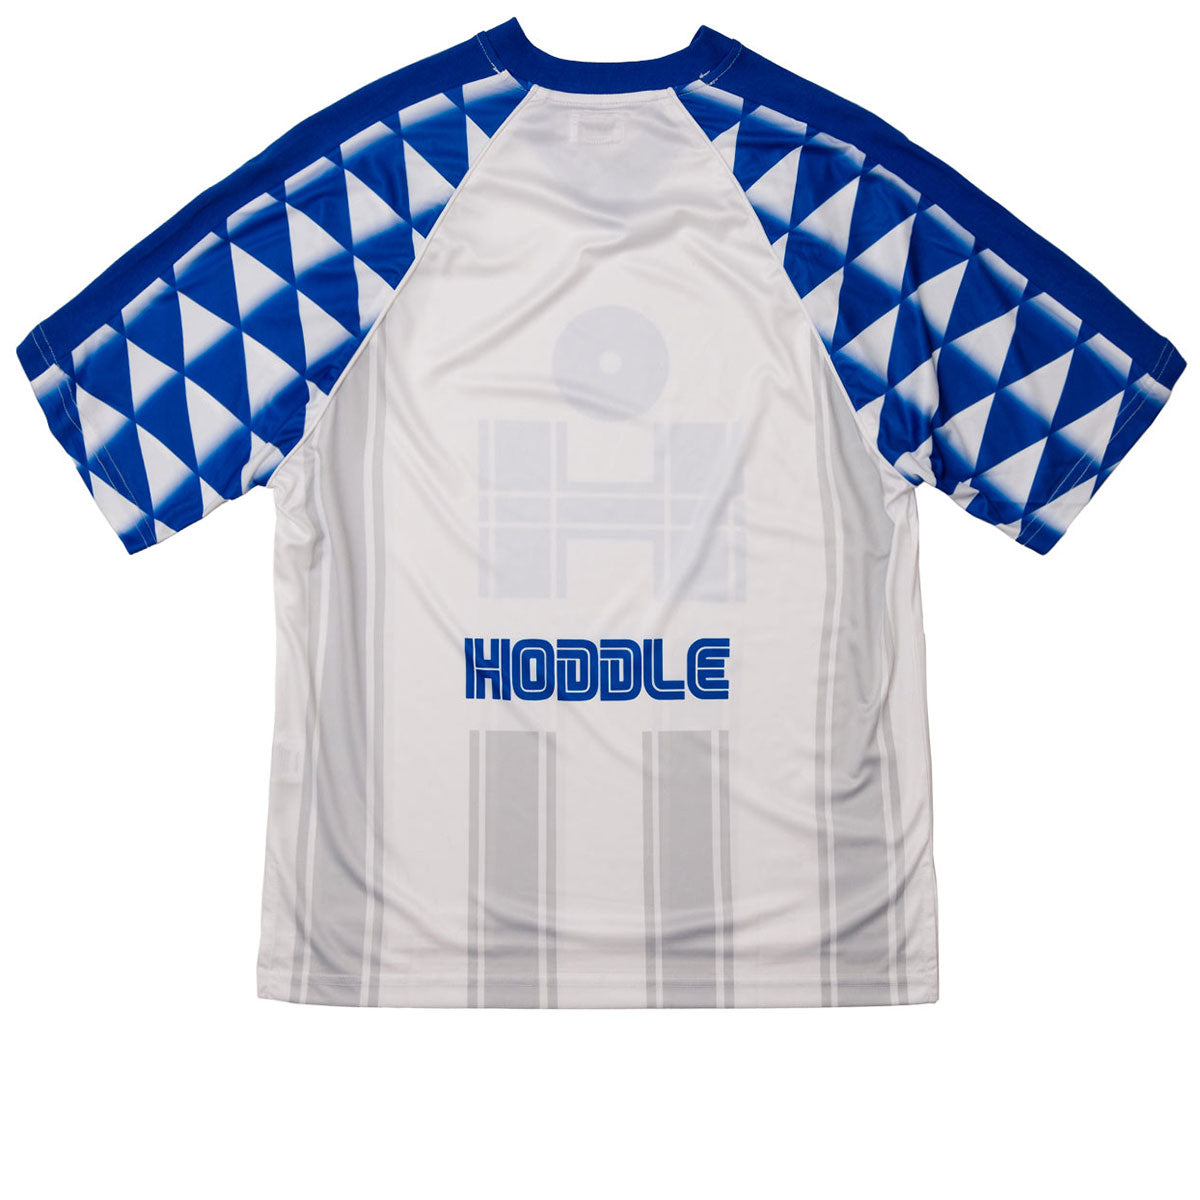 Hoddle Football Jersey - Blue image 2